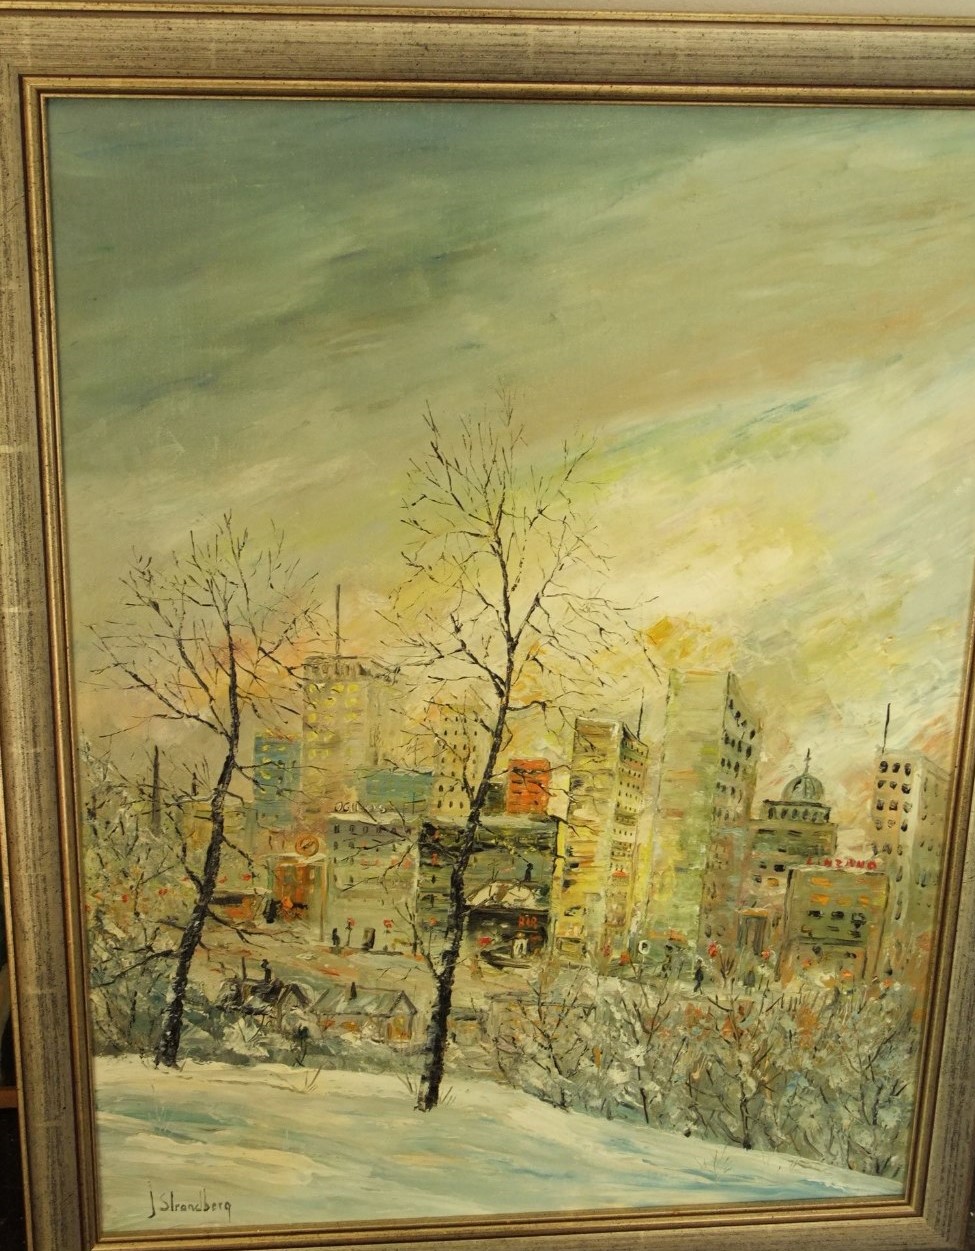 J Strandburg (20th century) - Winter city landscape, oil on canvas, signed, 60 x 45cm framed,